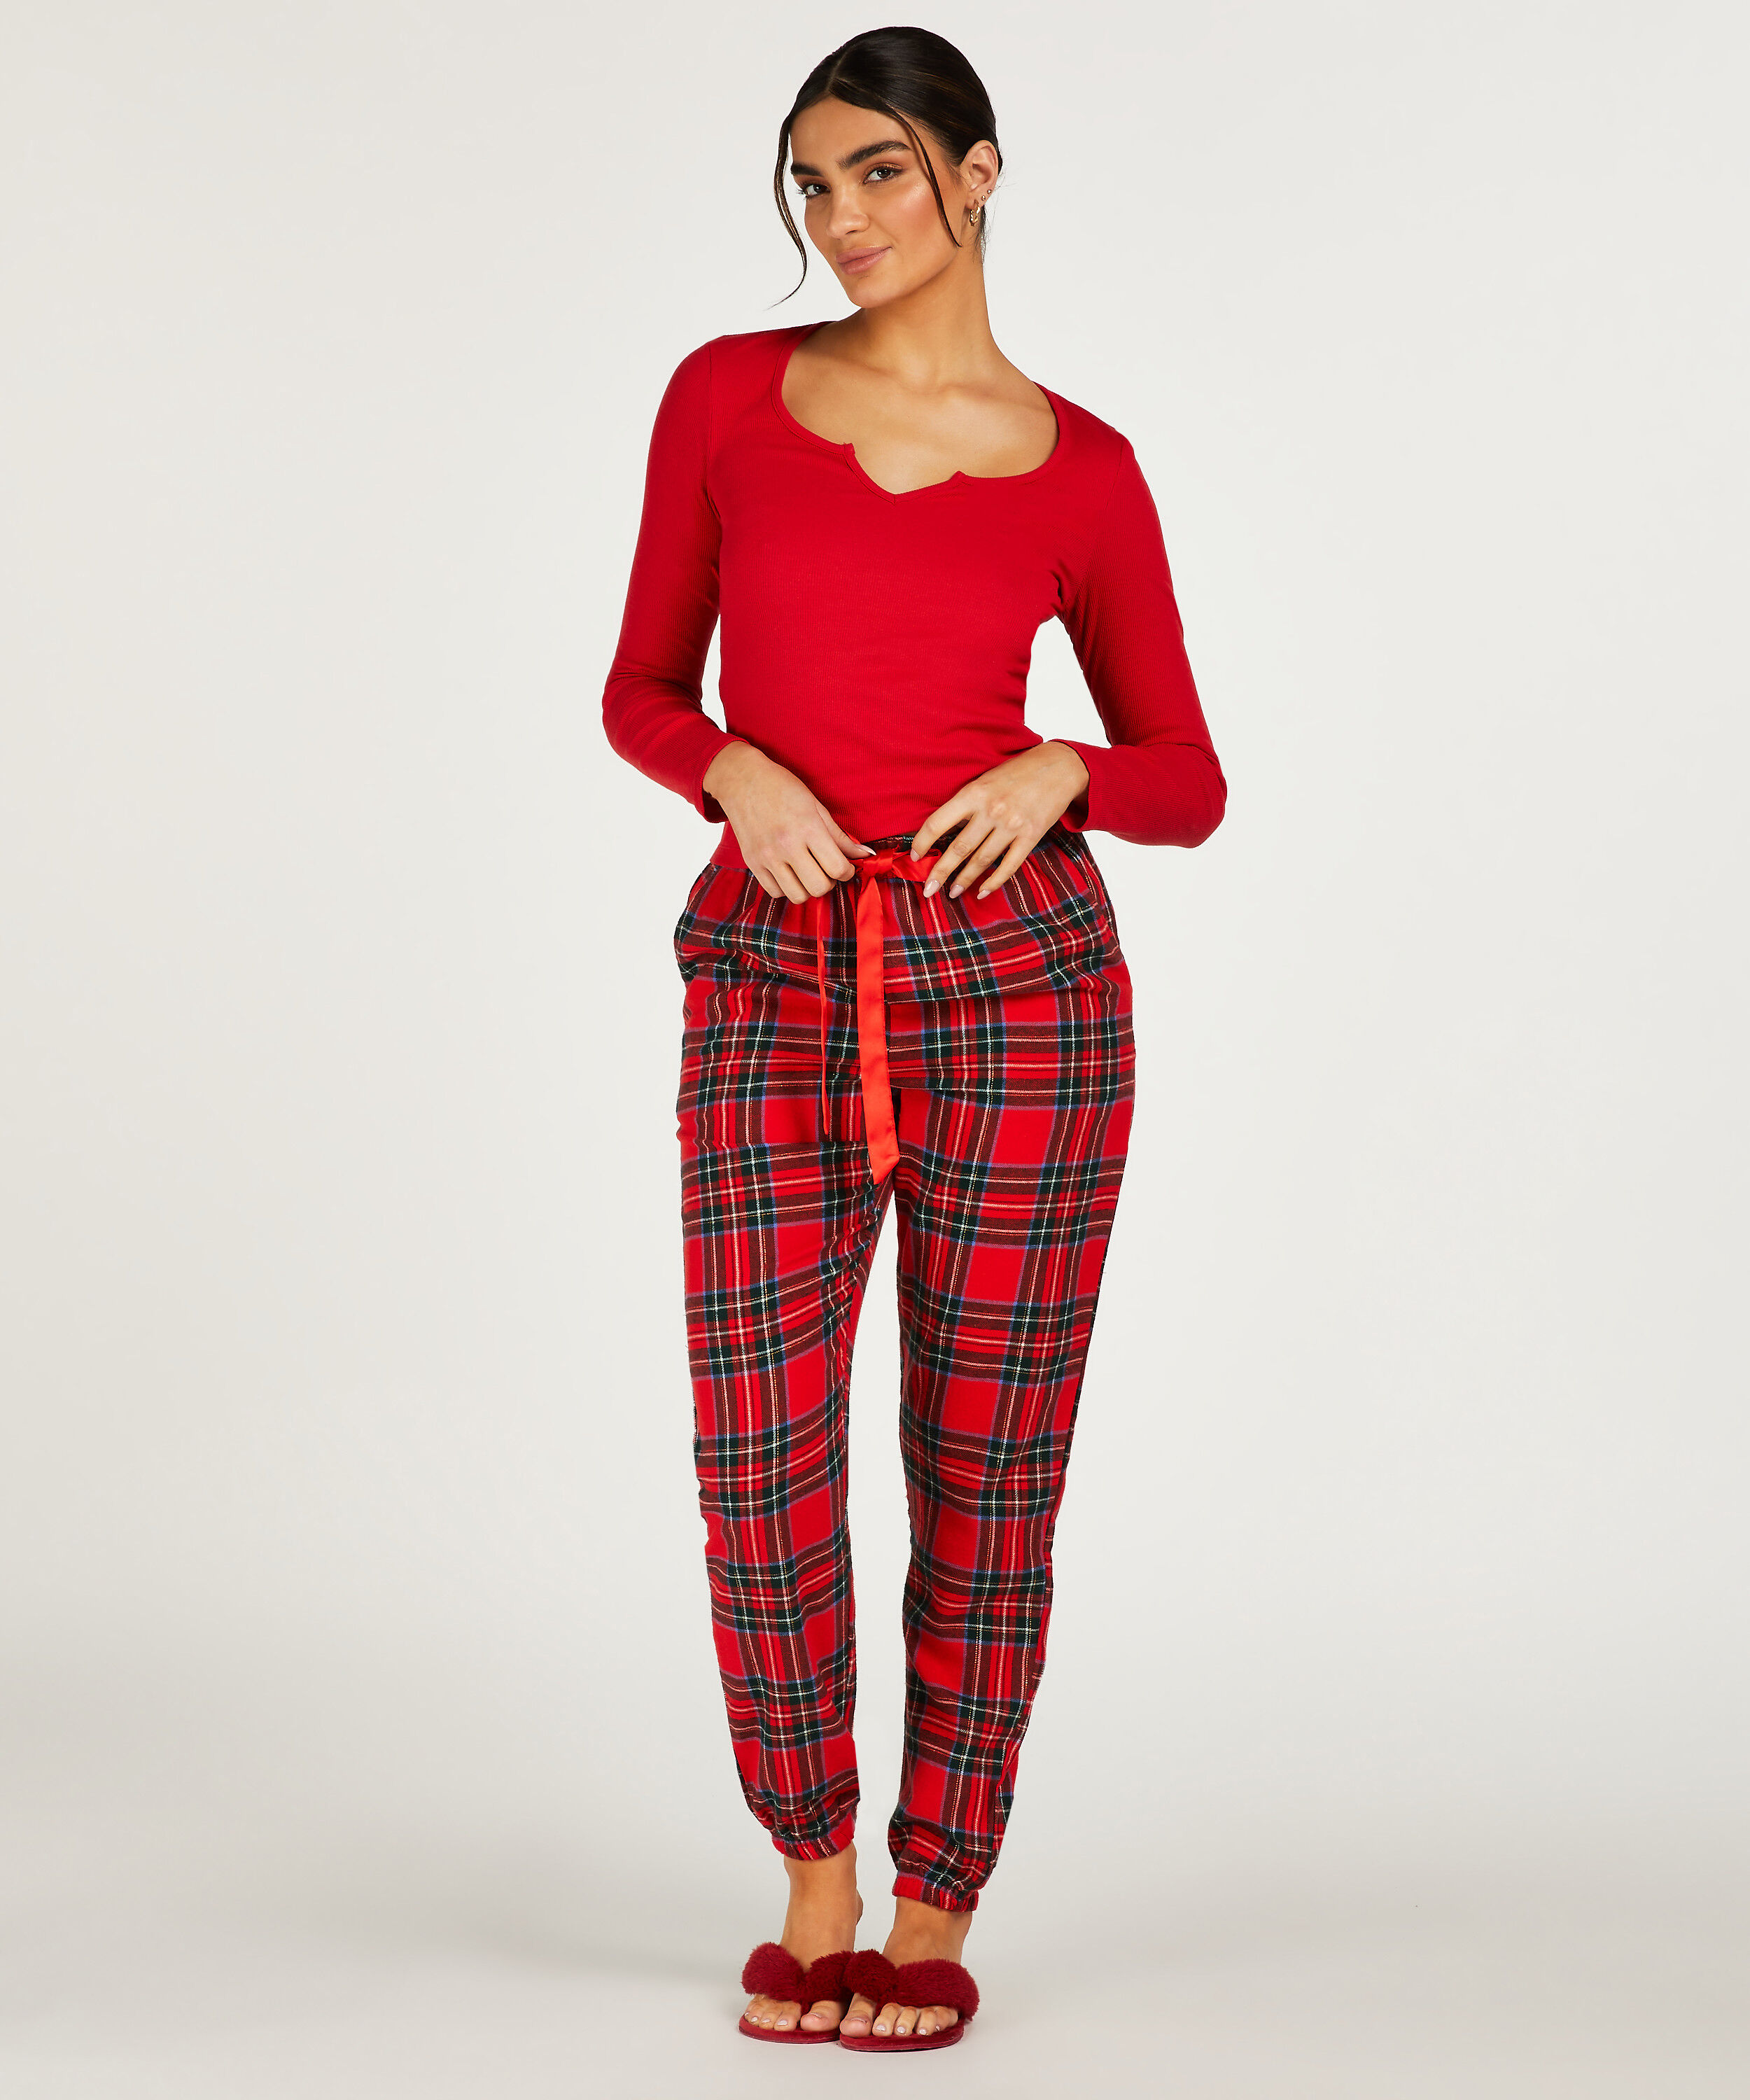 Regular Fit Flannel pyjama bottoms  RedGreen checked  Men  HM IN